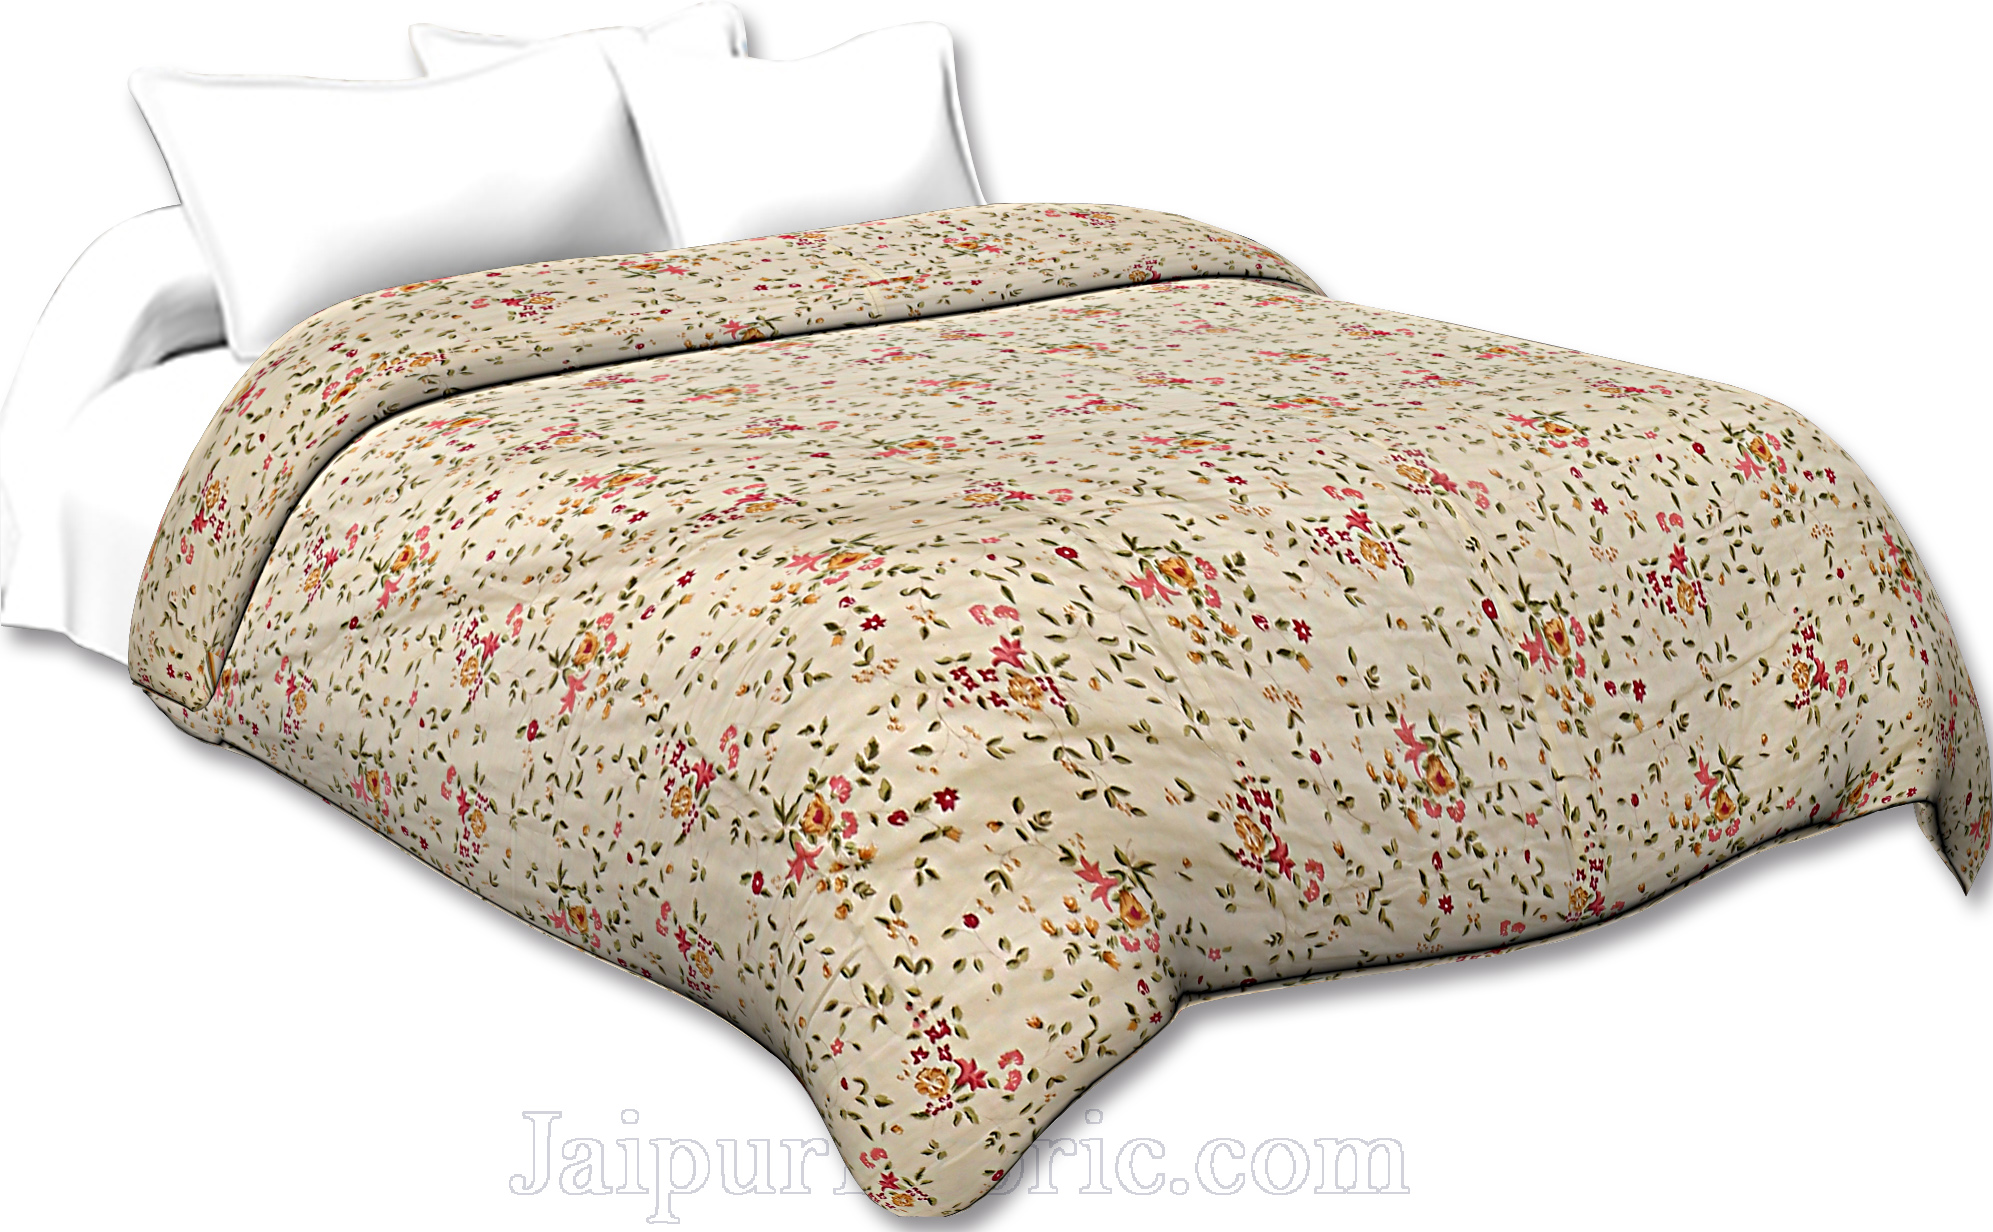 COMBO62 Cream Floral Design 1 Cotton Double Bedsheet + 1 Dohar Combo